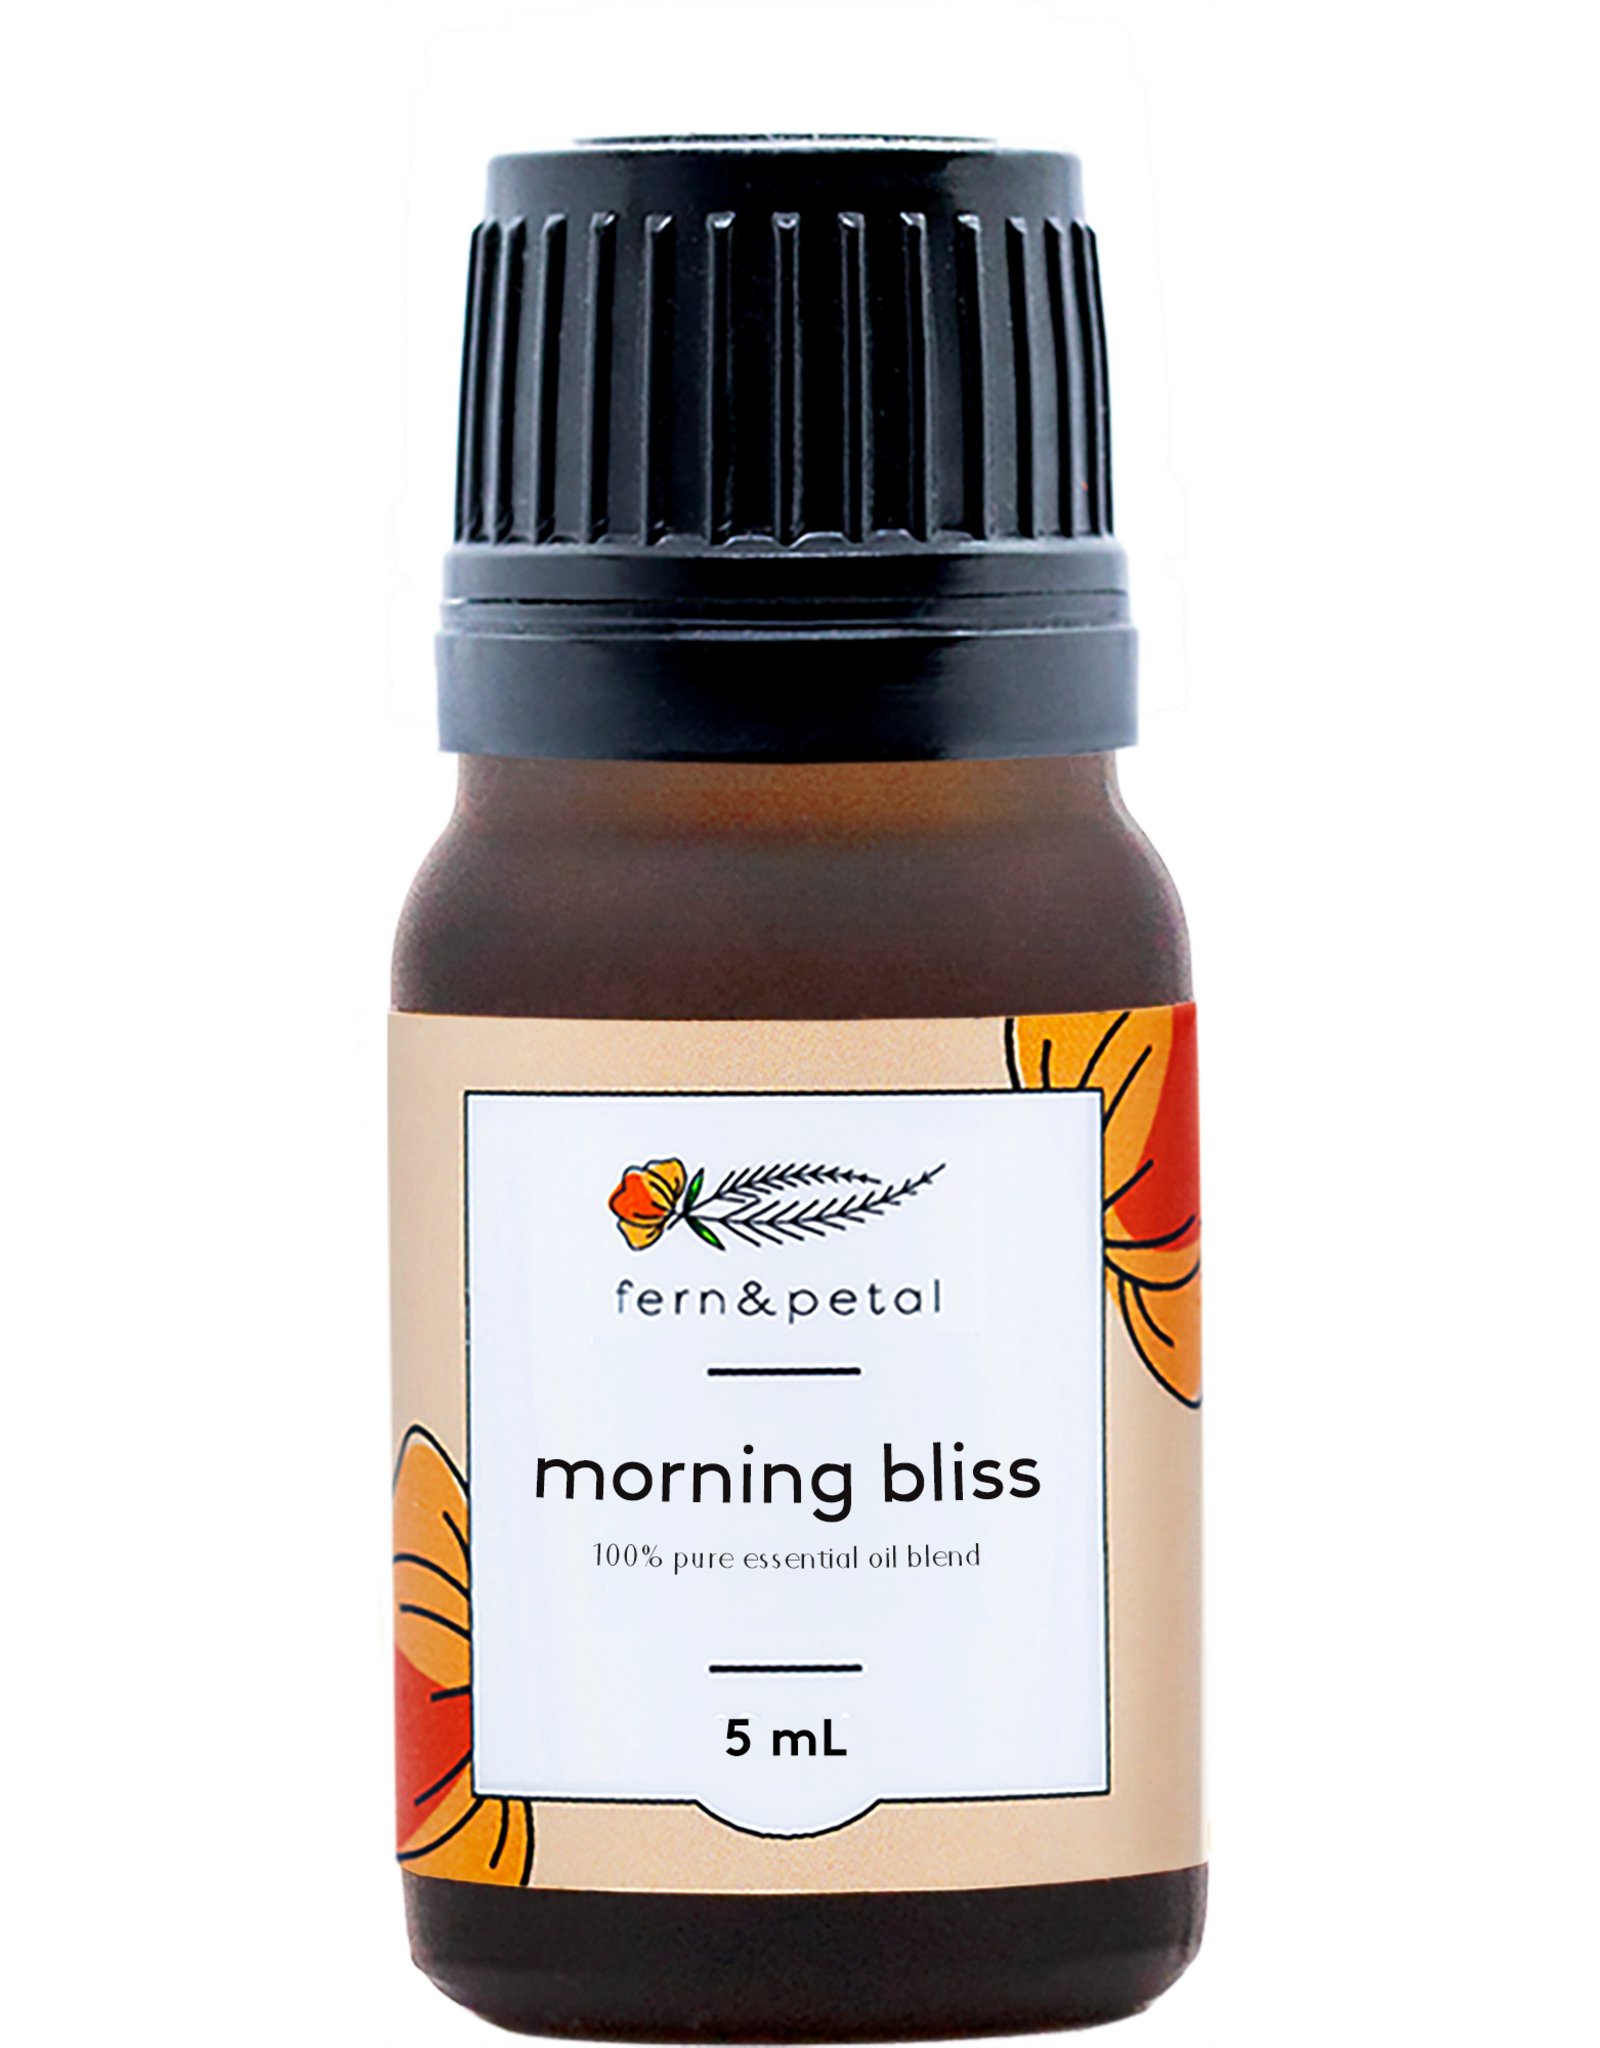 Fern & Petal - Morning Bliss 5ml